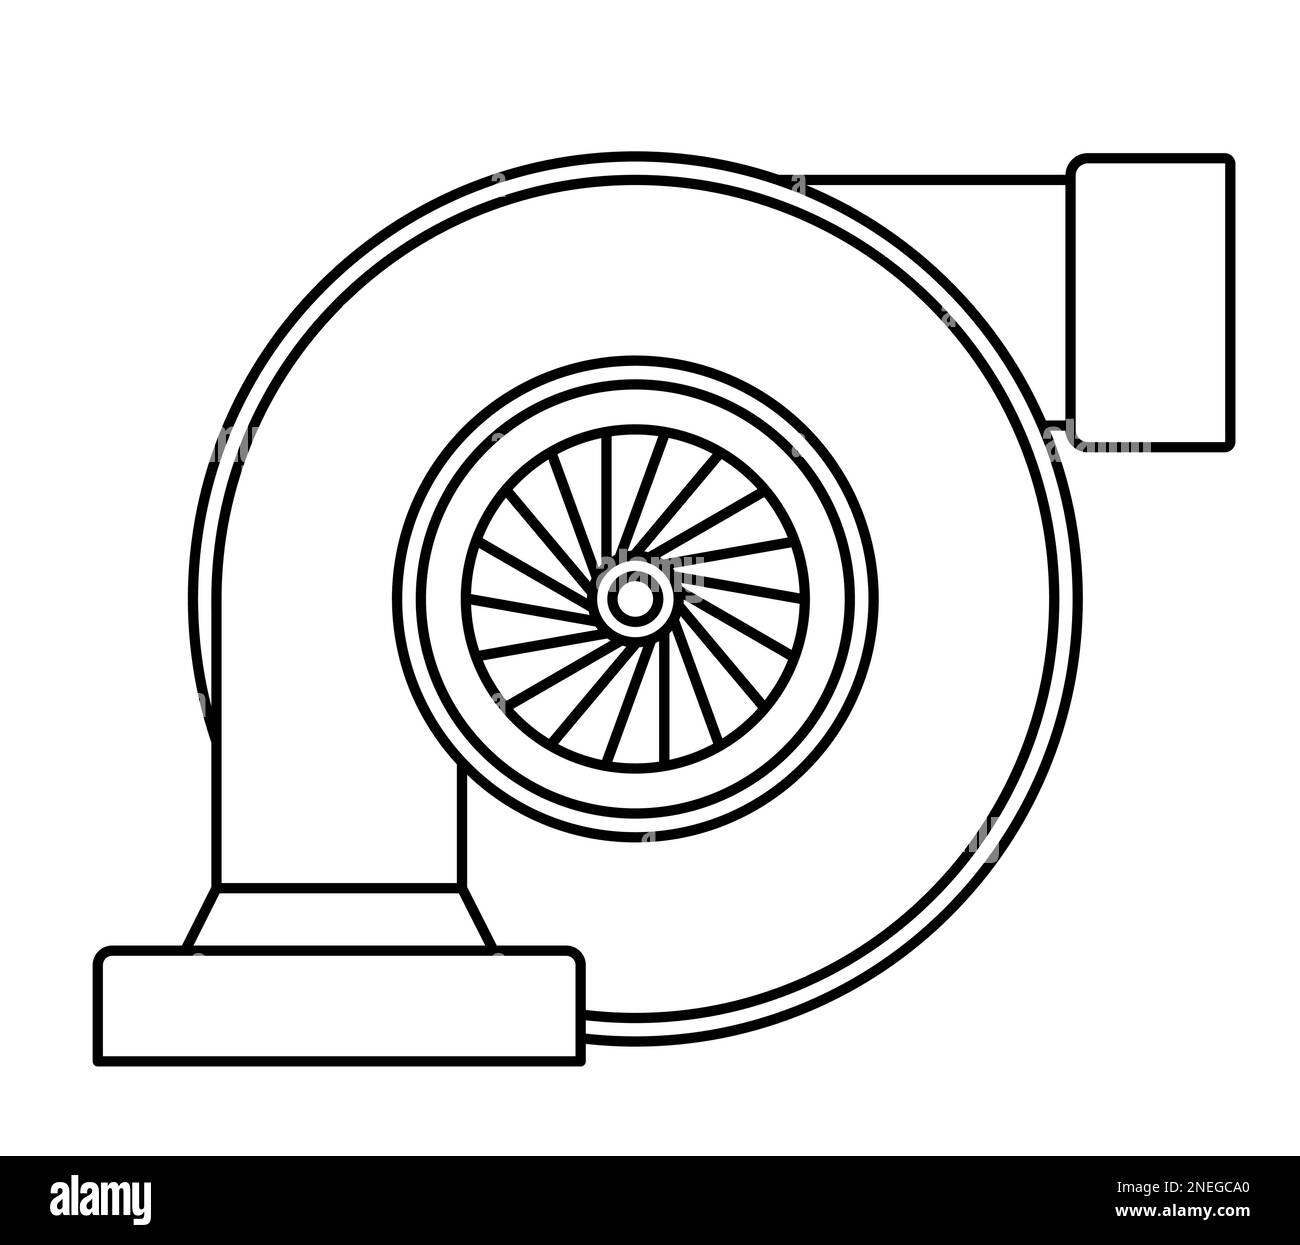 Contour illustration of dynamic axisymmetric centrifugal compressor Stock Vector